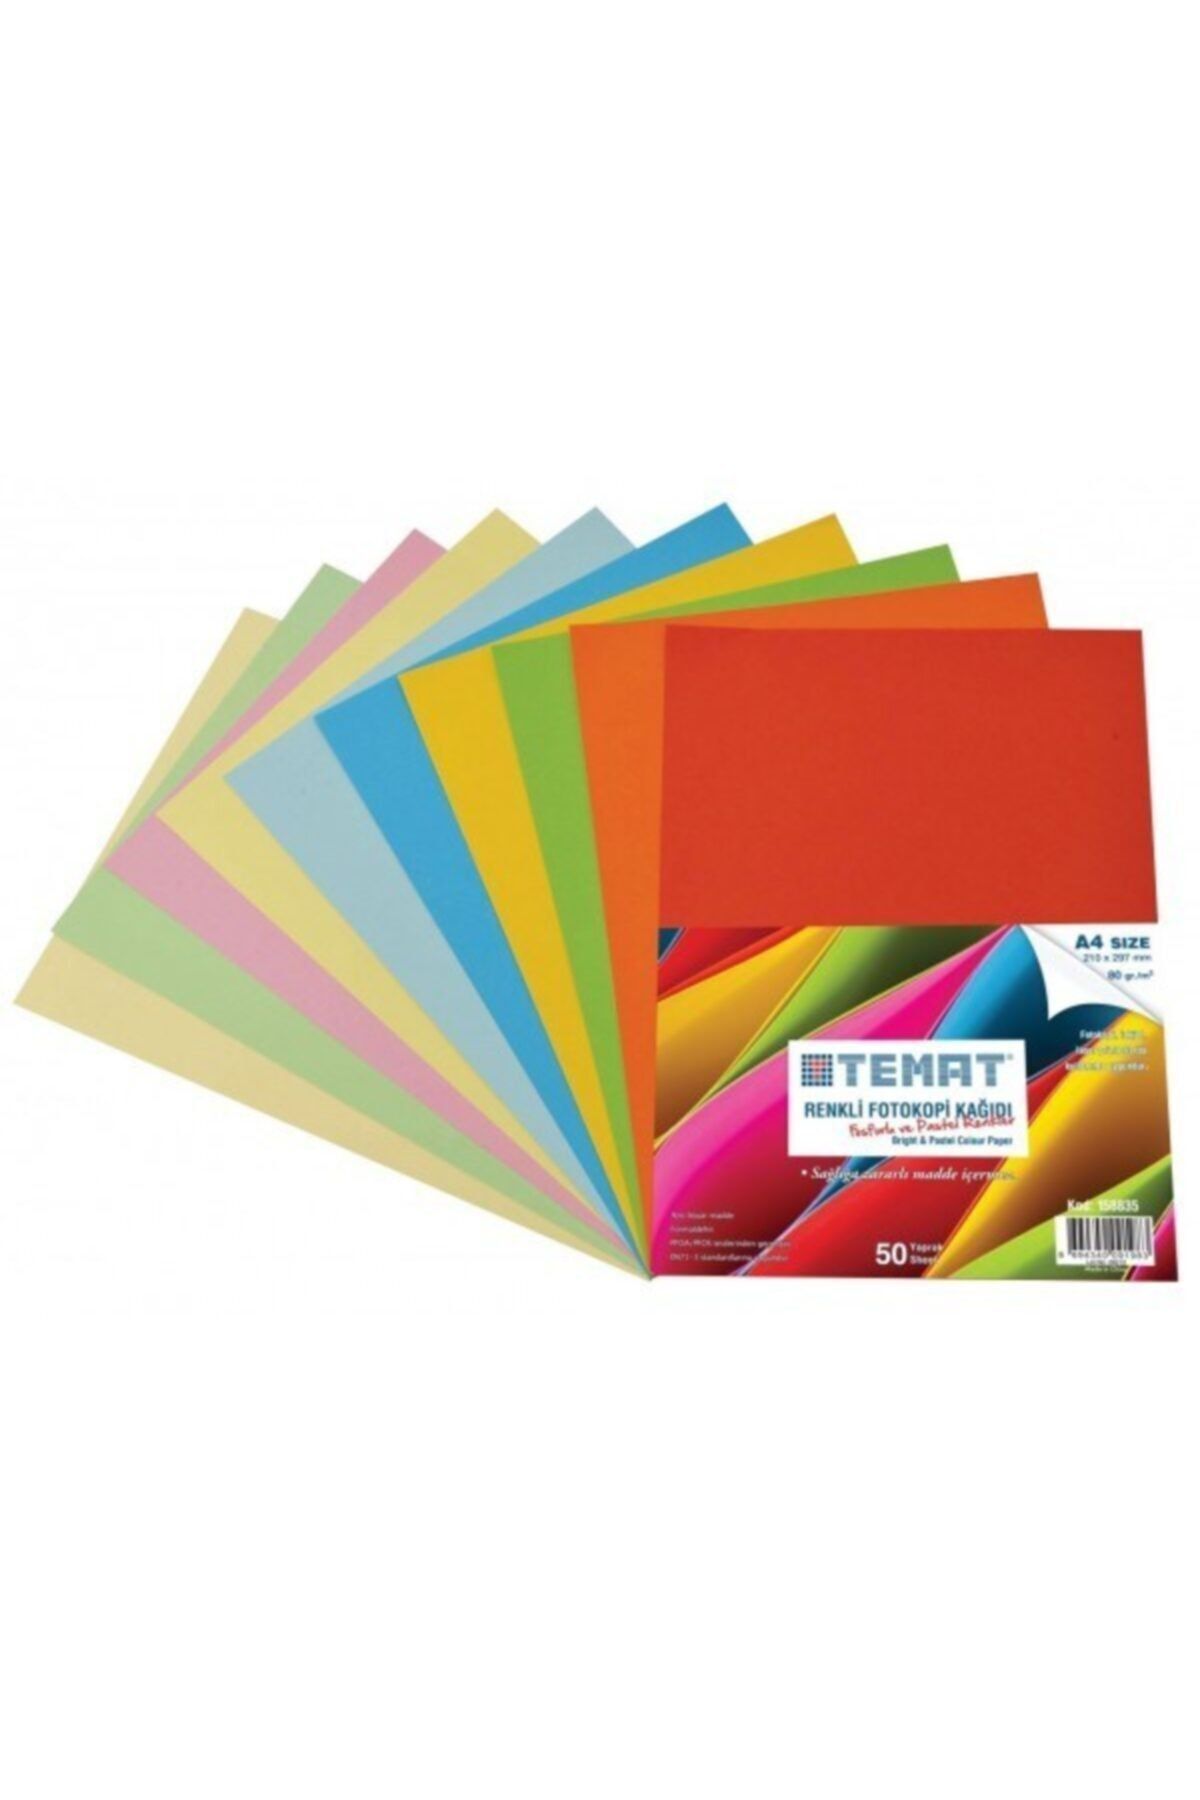 Genel Markalar Renkli A4 Fotokopi Kağıdı 10 Renk 50'li Paket